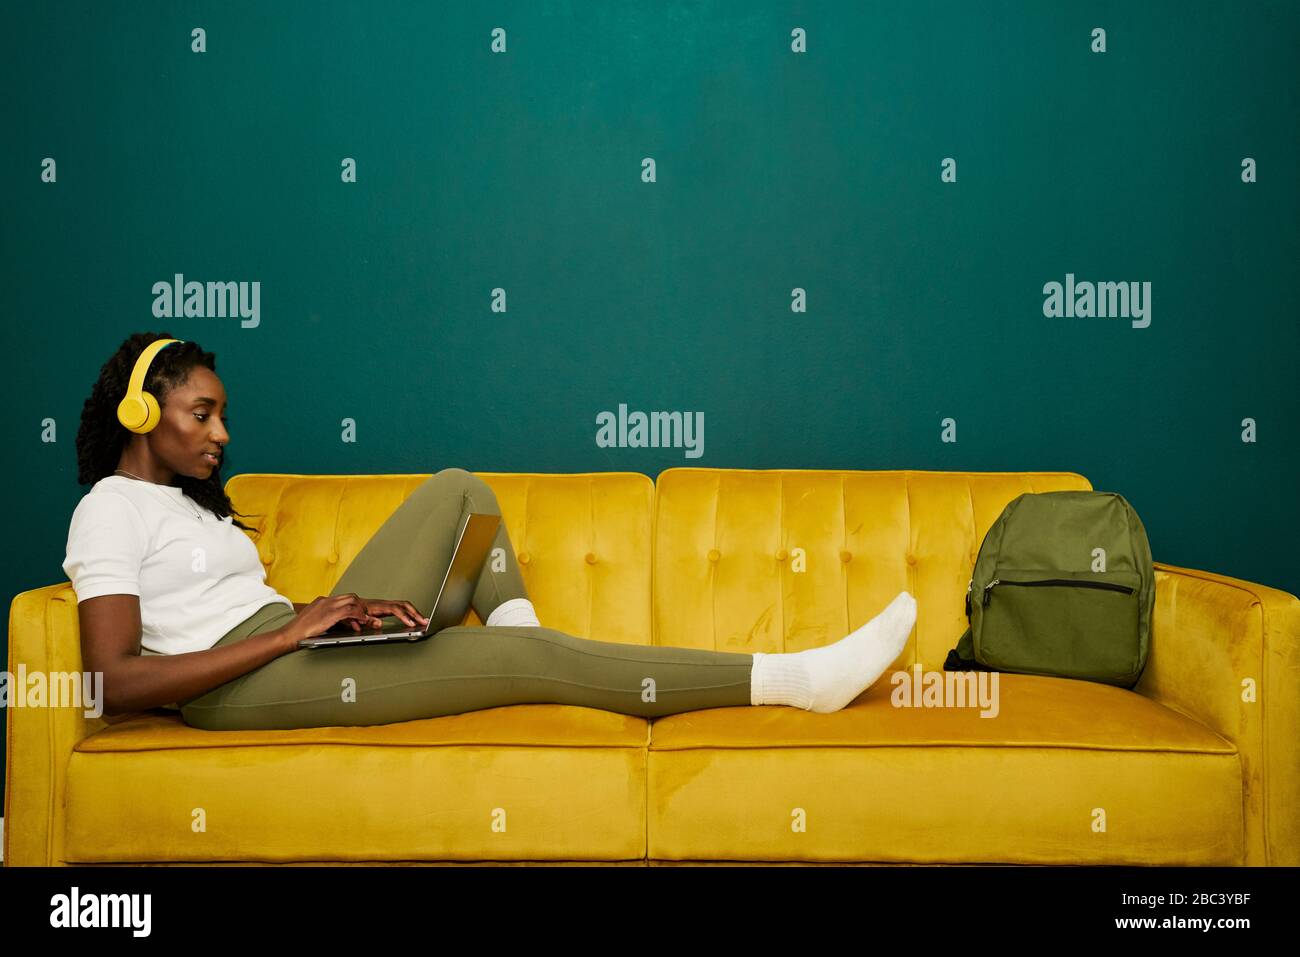 Afroamerican student laying at a yellow sofa front a dark green wall Stock Photo